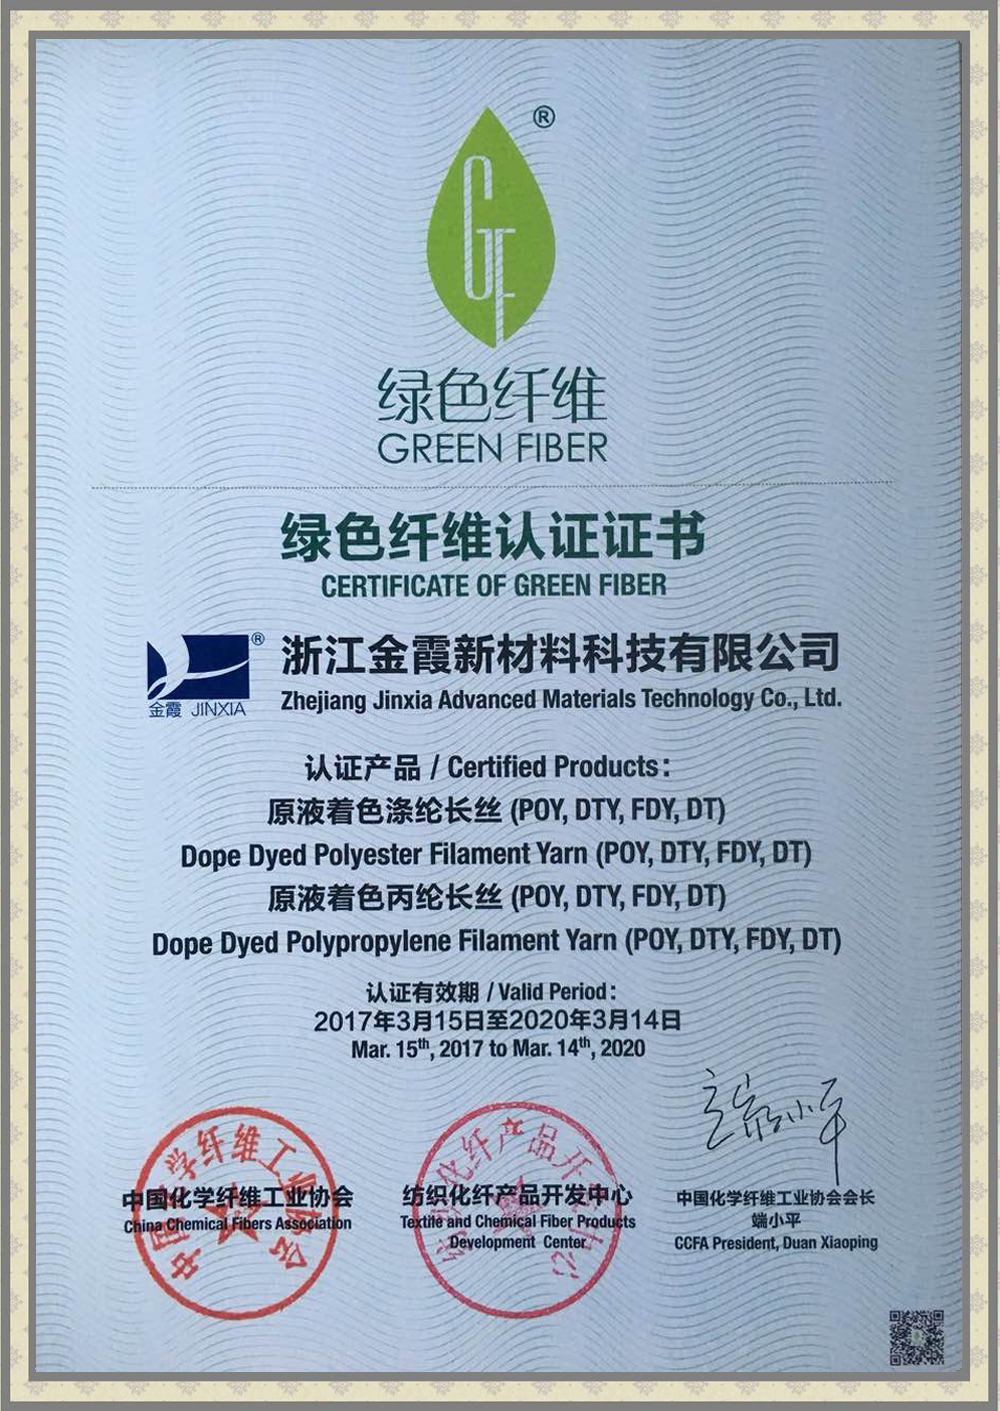 Green fiber certification